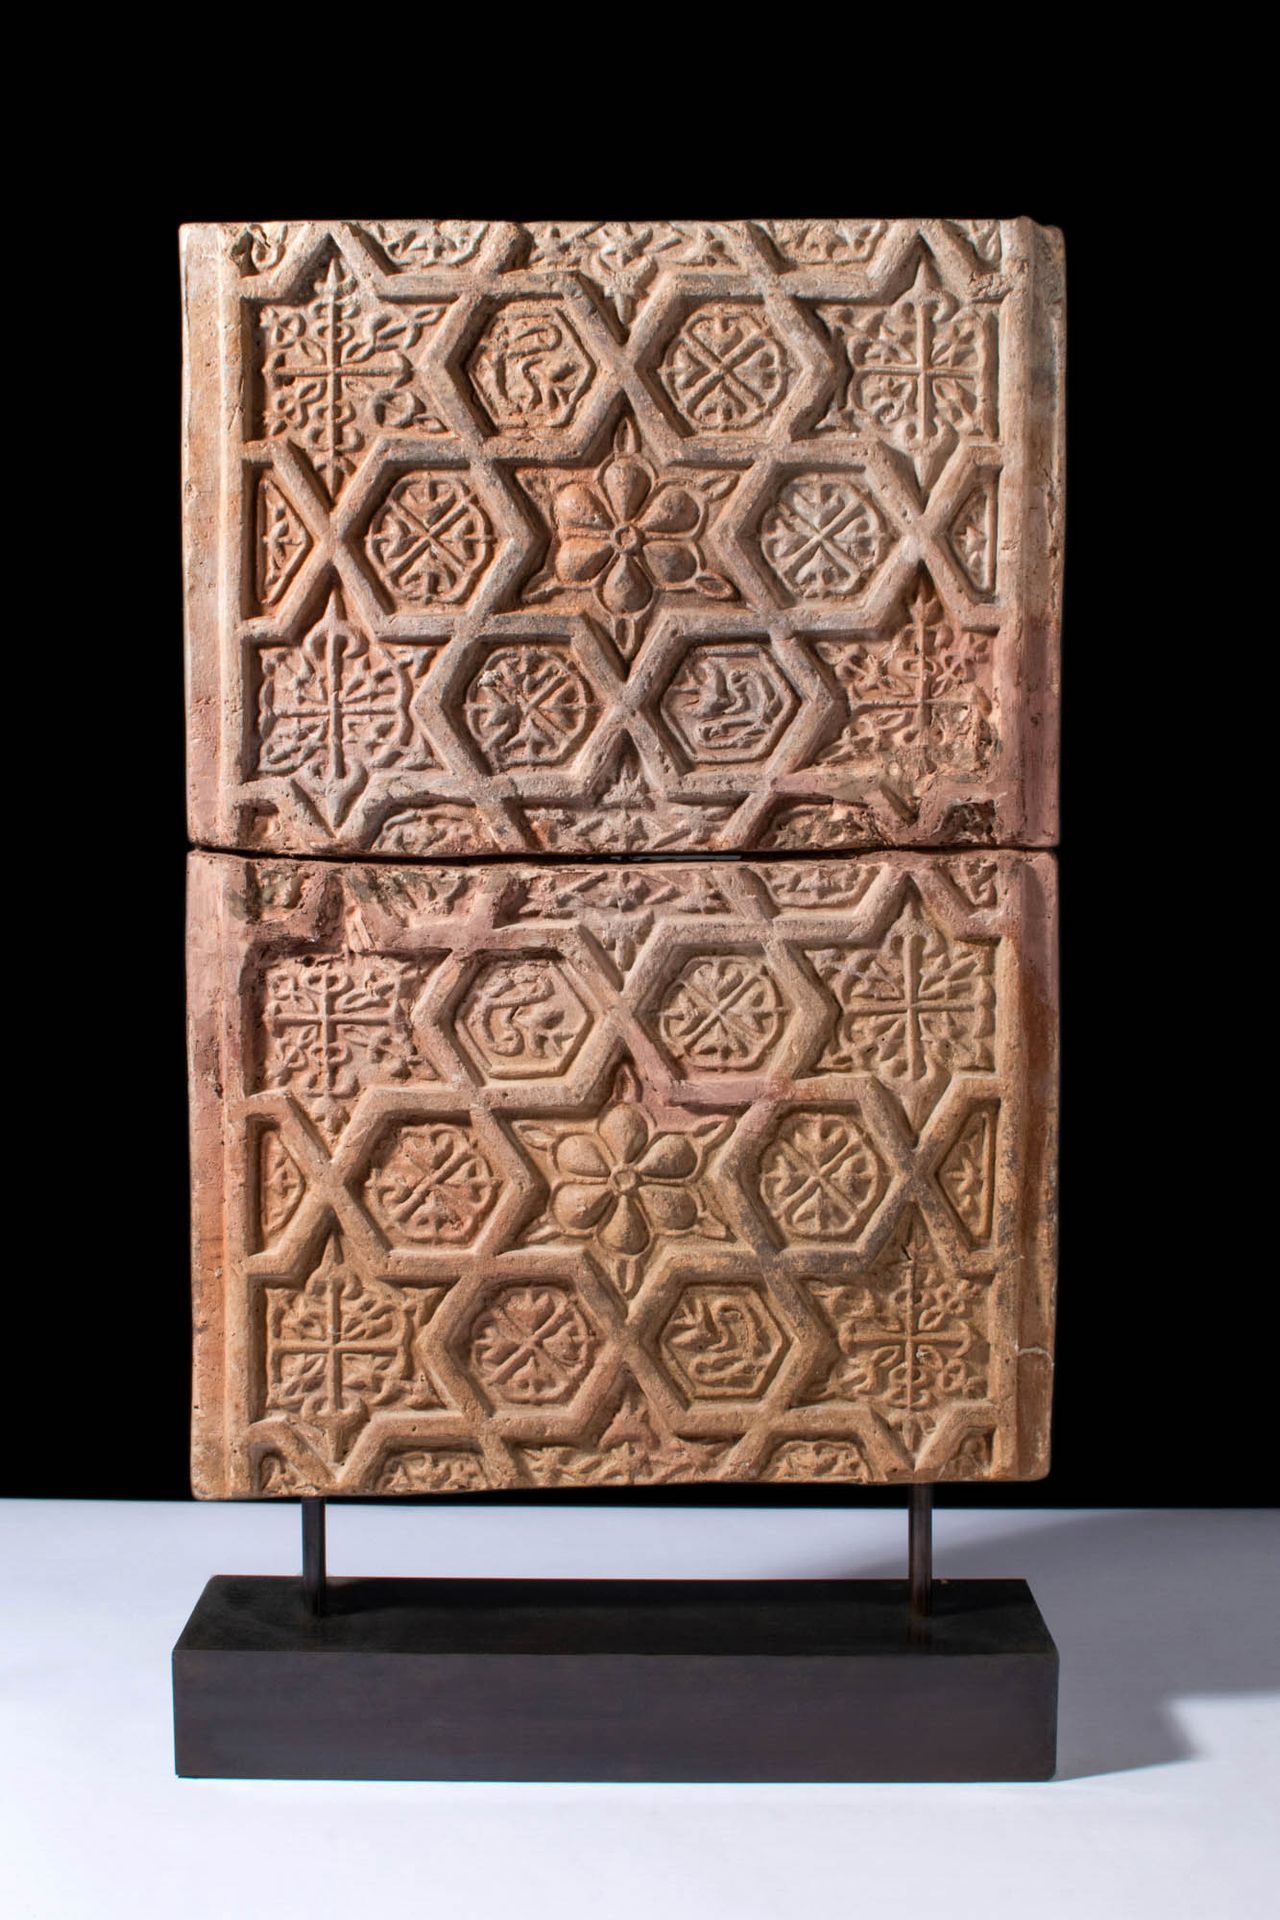 SELJUK TERRACOTTA PAIR OF DECORATIVE TILES Ca.公元 1100 - 1200 年。
一对长方形赤陶装饰瓦片。上表面有&hellip;